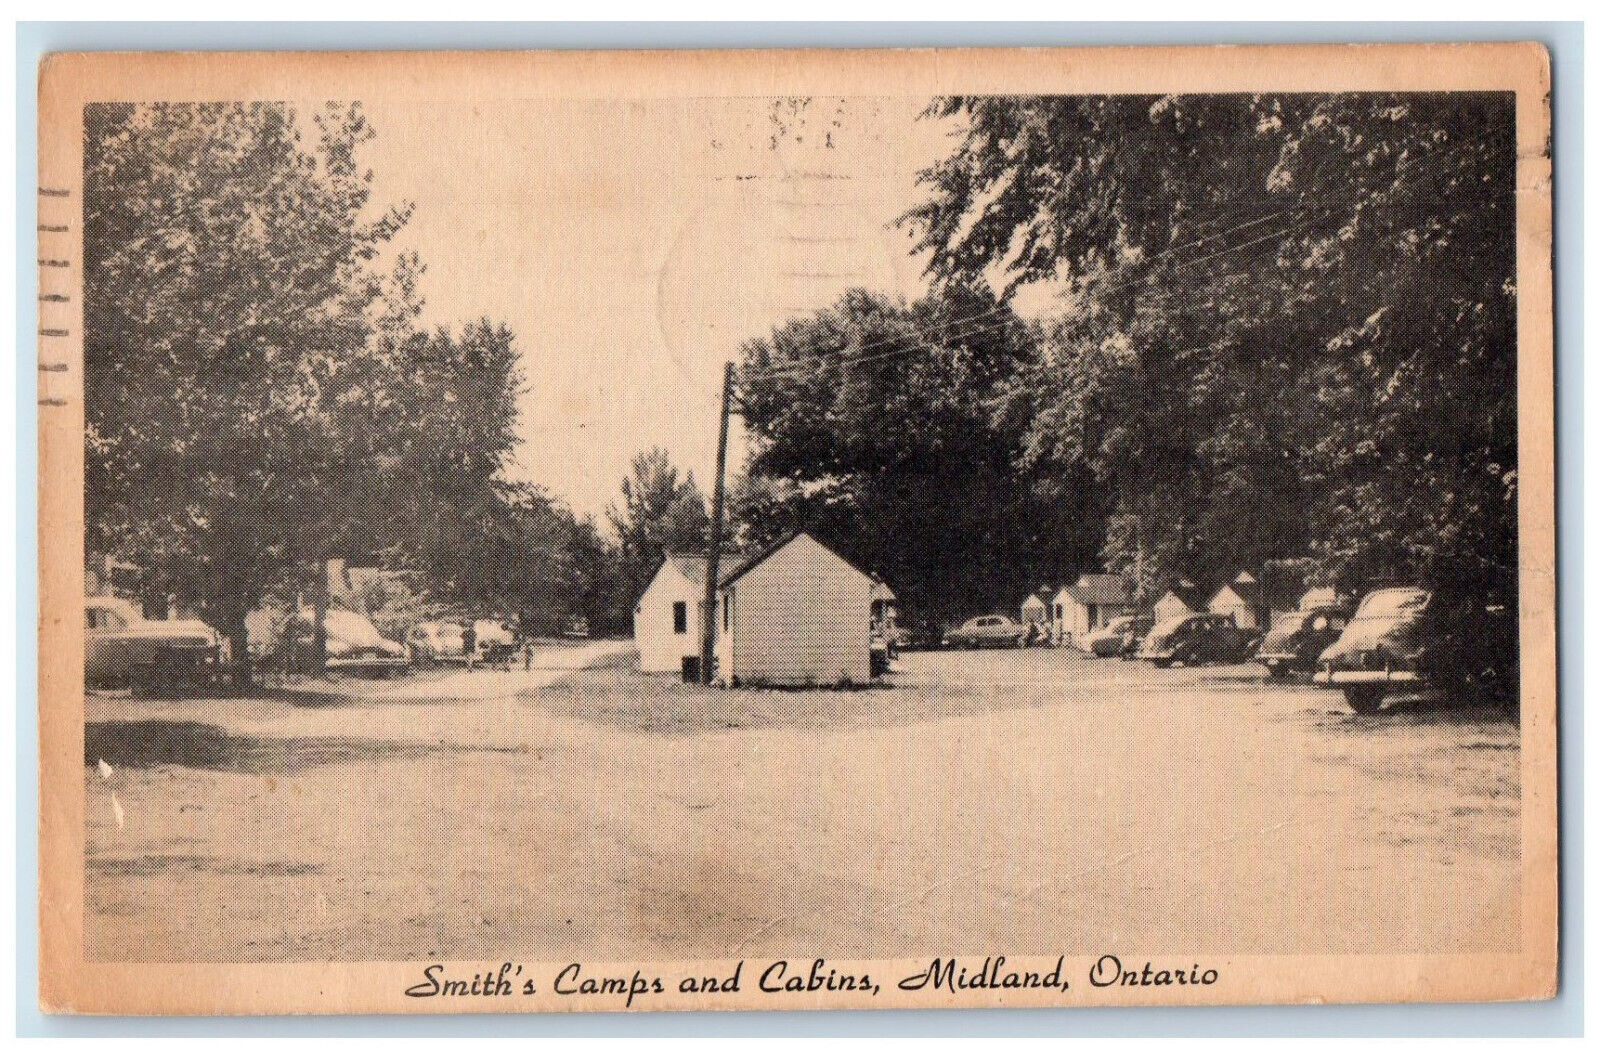 1954 Smith's Camps and Cabins Midland Ontario Canada Vintage Postcard